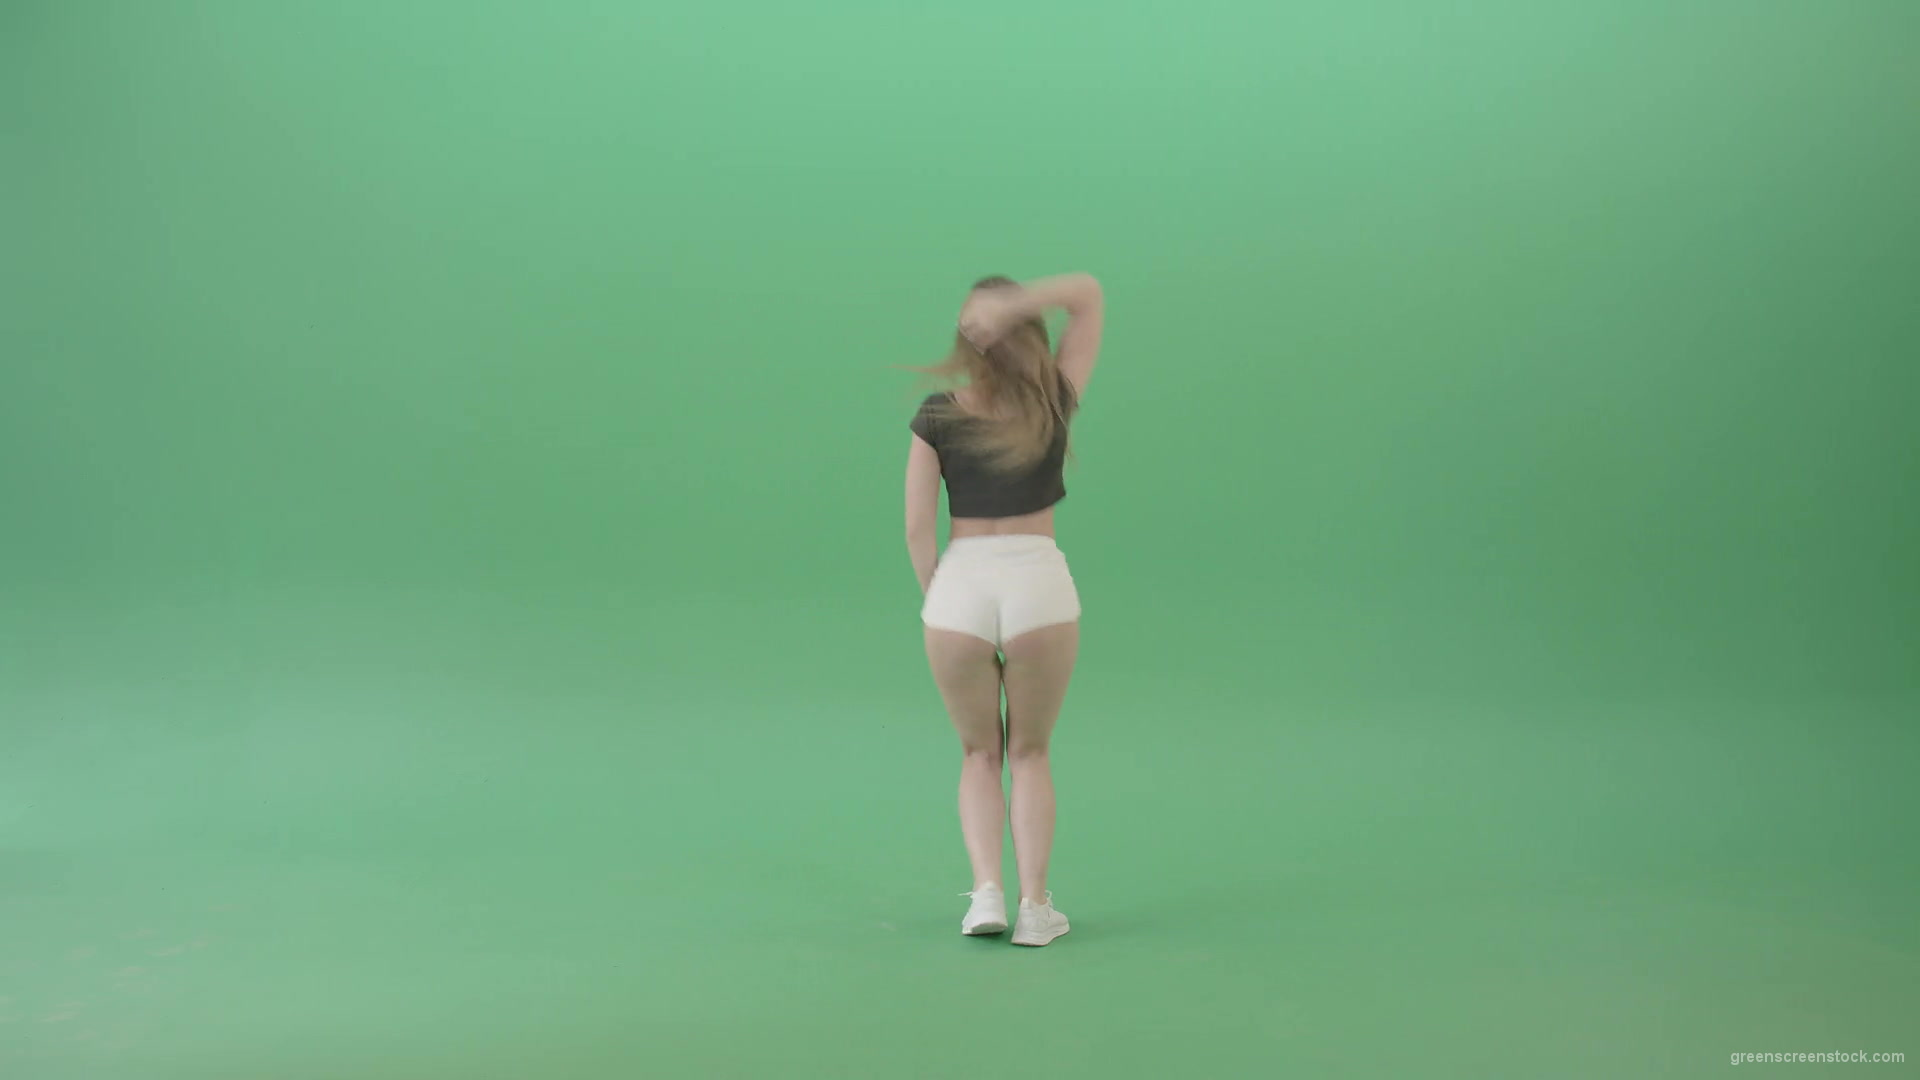 Long-dancing-Video-Footage-of-Twerking-Girl-shaking-ass-and-dancing-over-Green-Screen-1920_009 Green Screen Stock